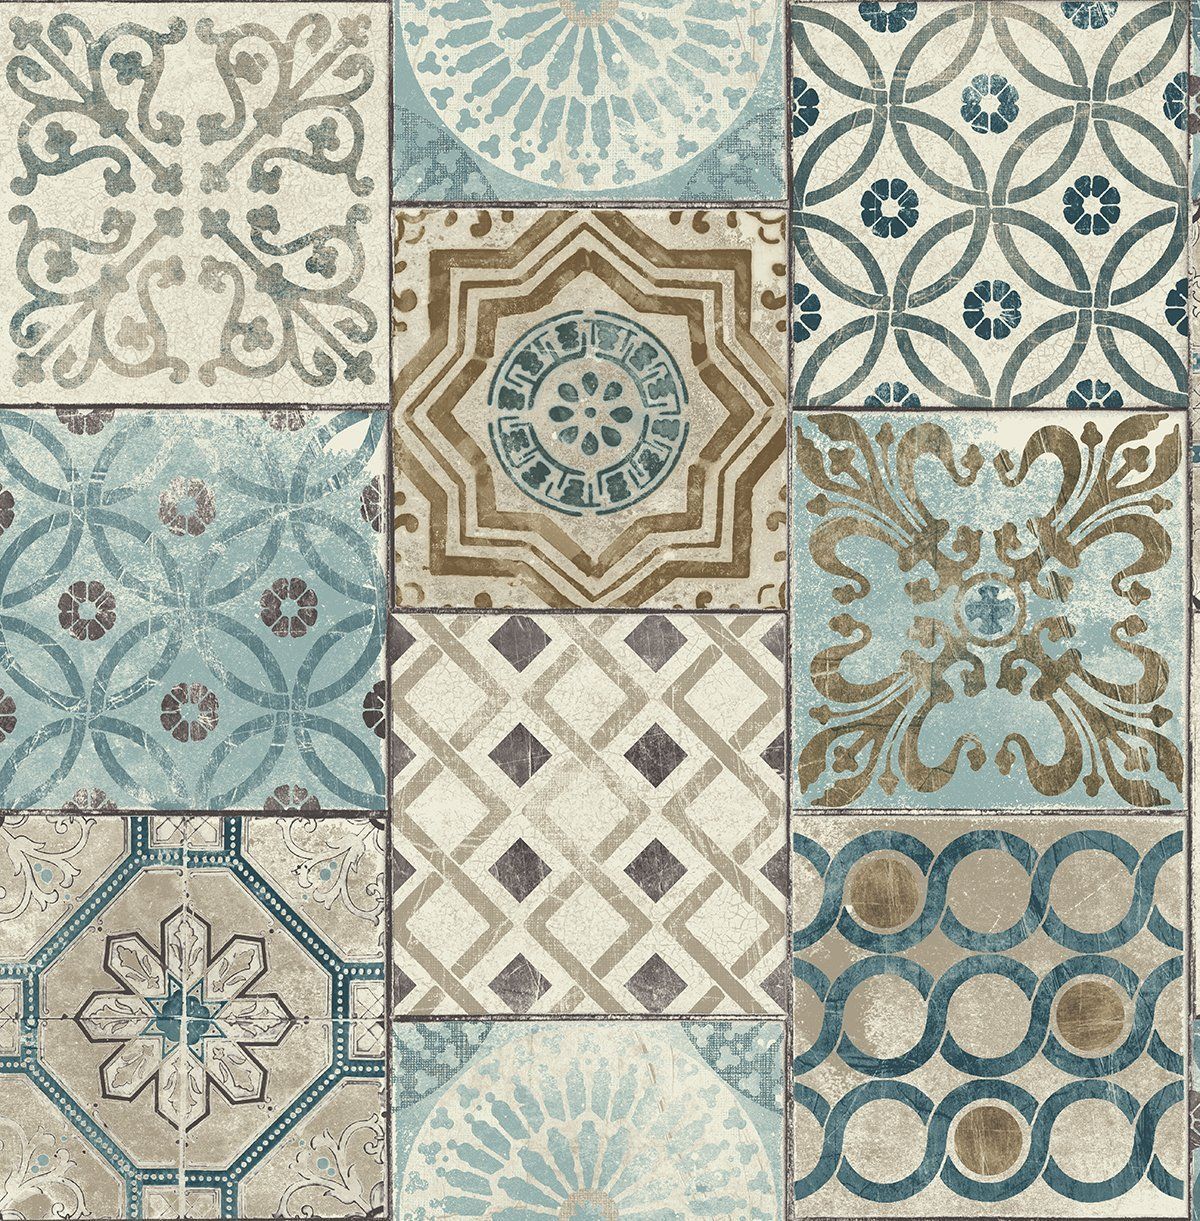 NextWall Moroccan Style Peel and Stick Mosaic Tile Wallpaper. (Blue, Copper & Grey) -com. Tile wallpaper, Patchwork tiles, Mosaic wallpaper